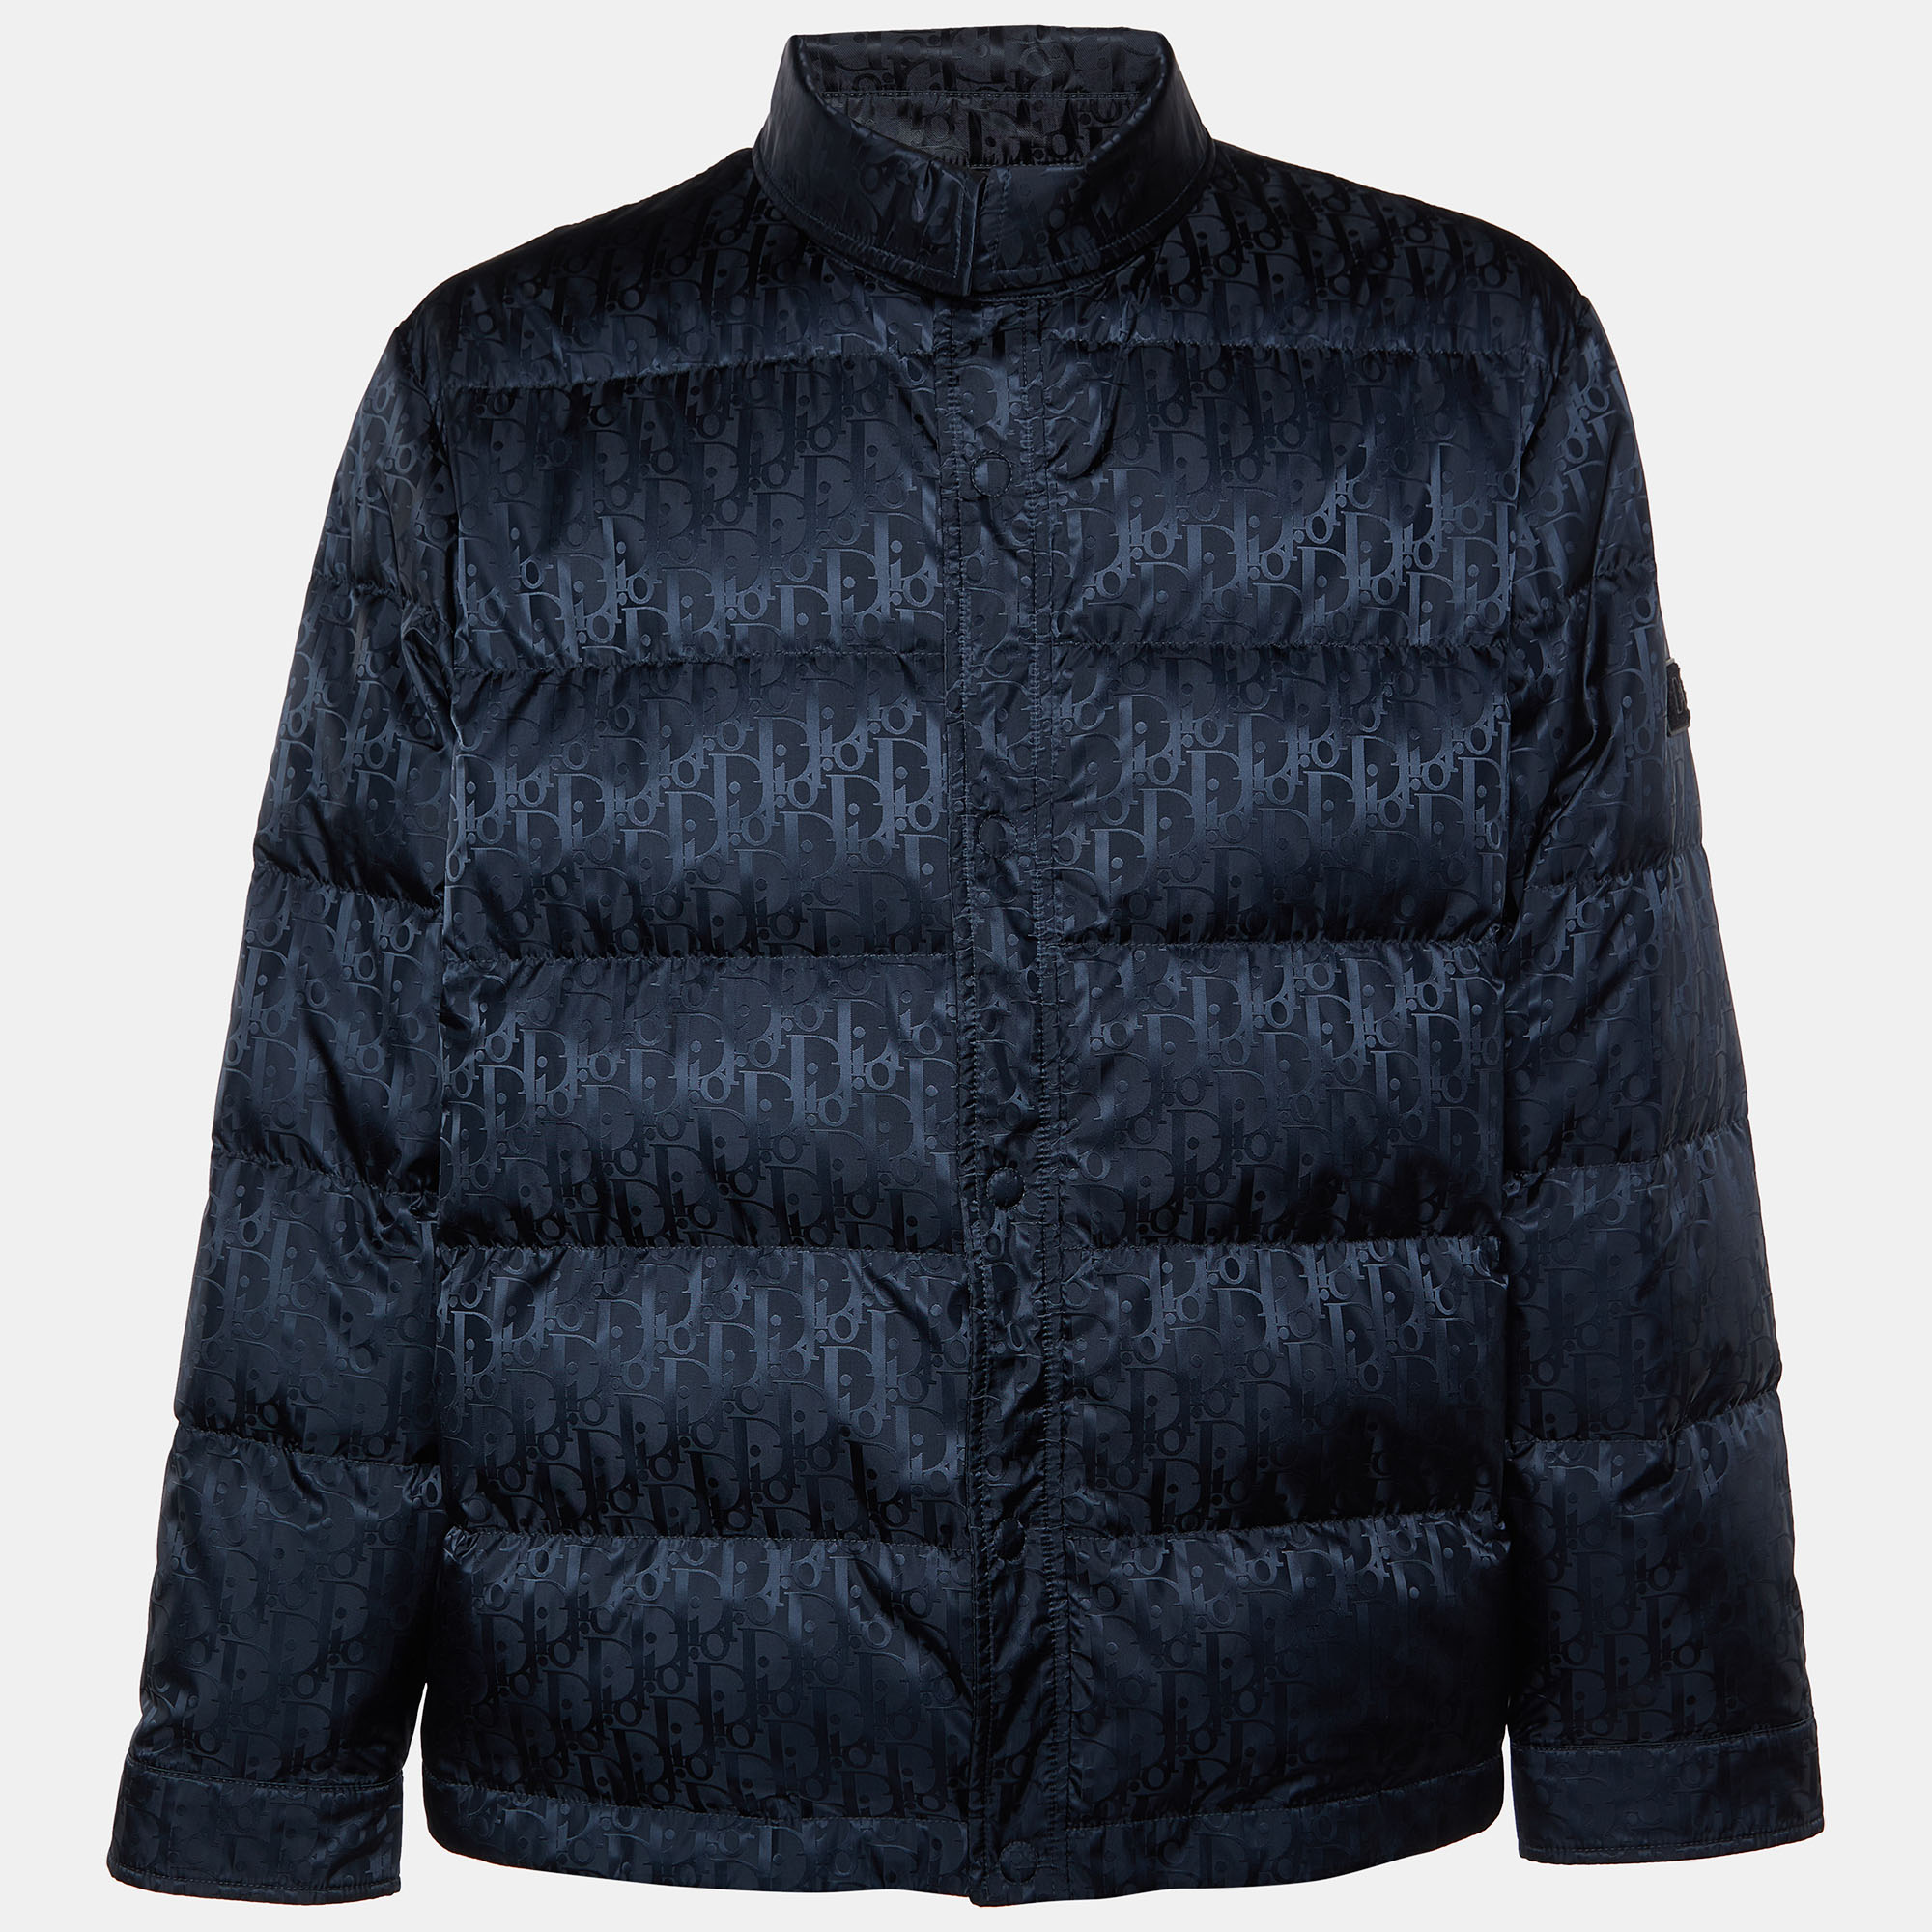 

Dior Homme Black Oblique Technical Jacquard Quilted Jacket